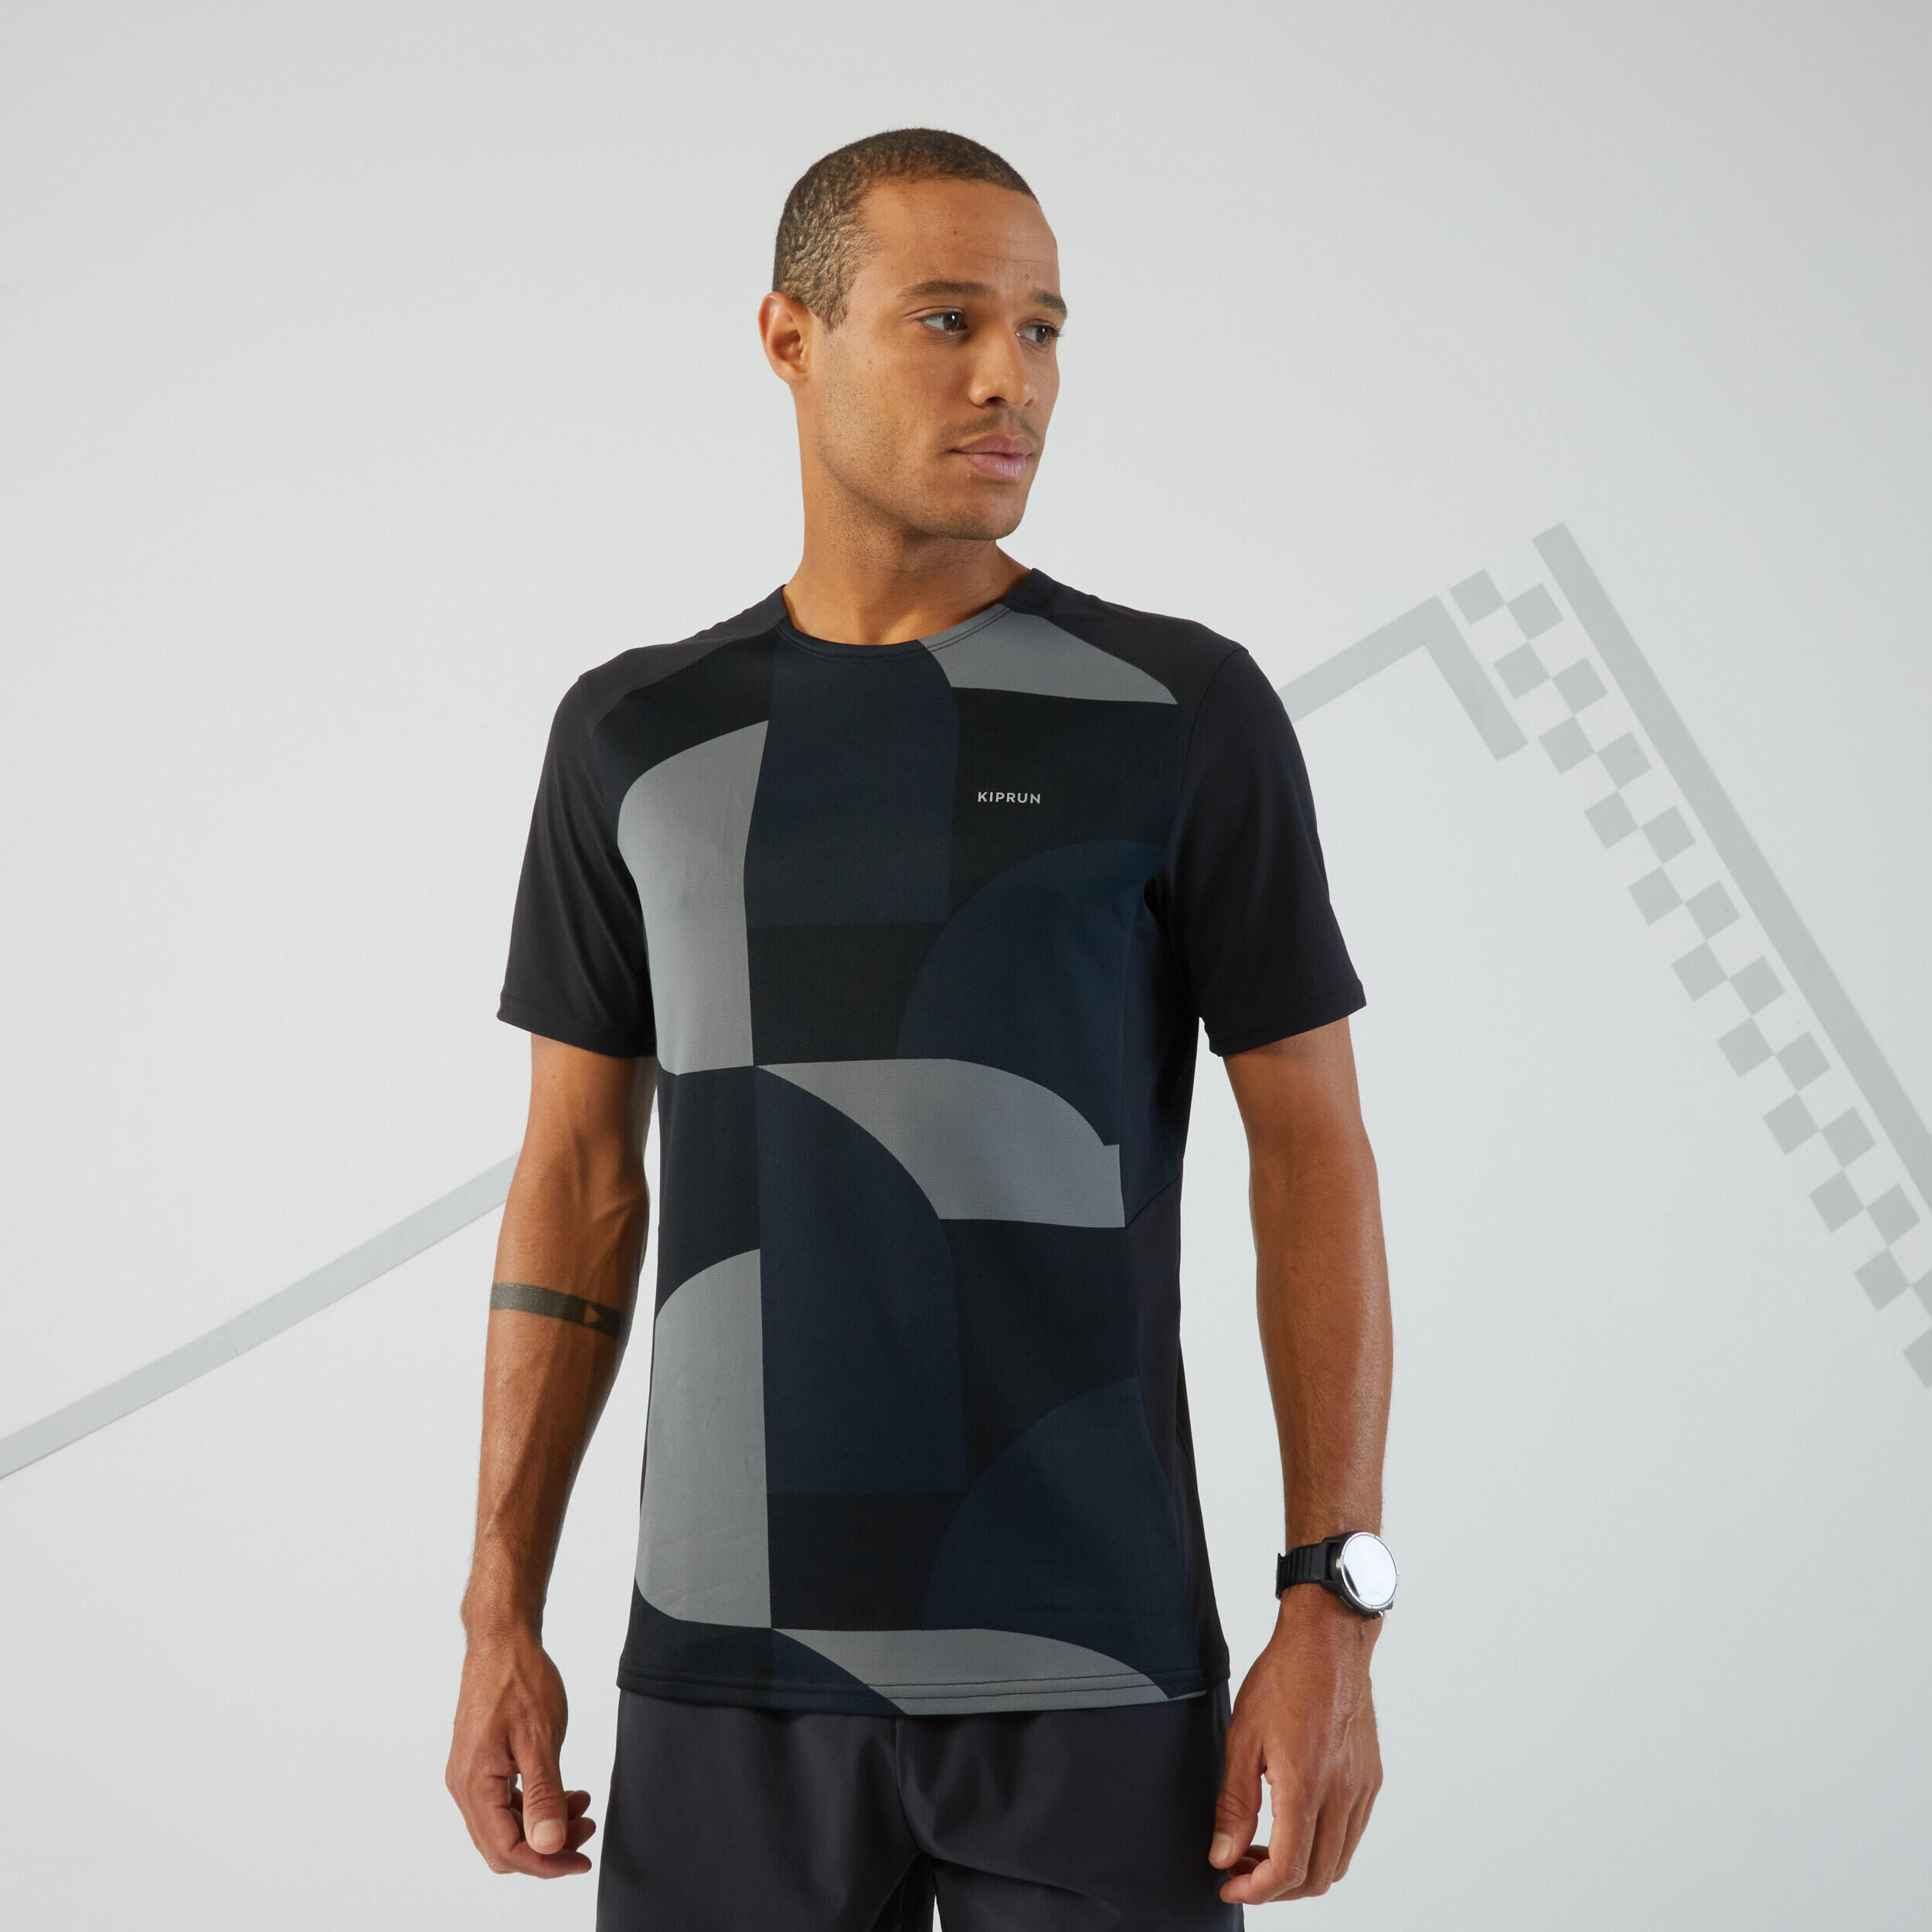 KIPRUN KIPRUN 900 Light Men's Breathable Running T-shirt - Black/Carbon grey